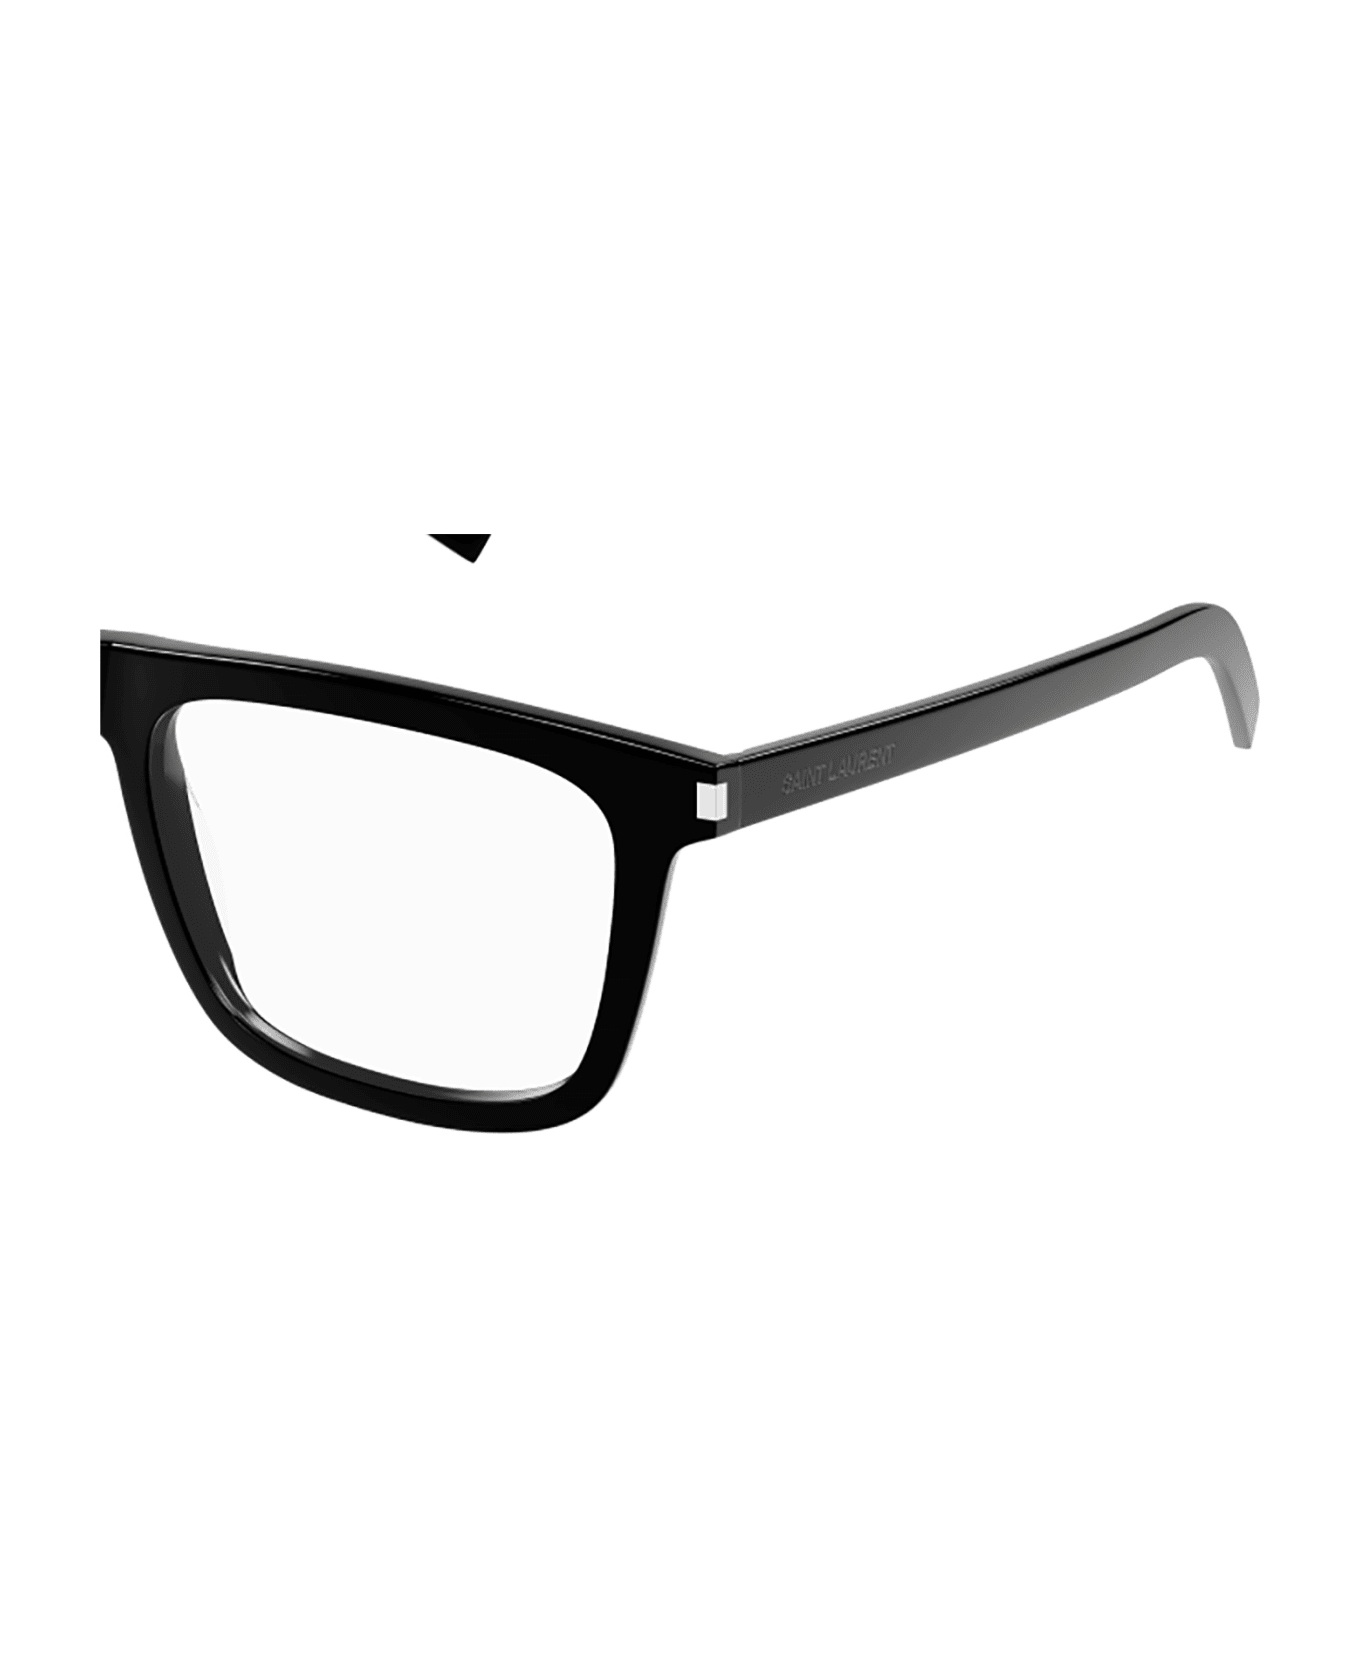 Saint Laurent Eyewear SL 547 SLIM OPT Eyewear - Black Black Transpare